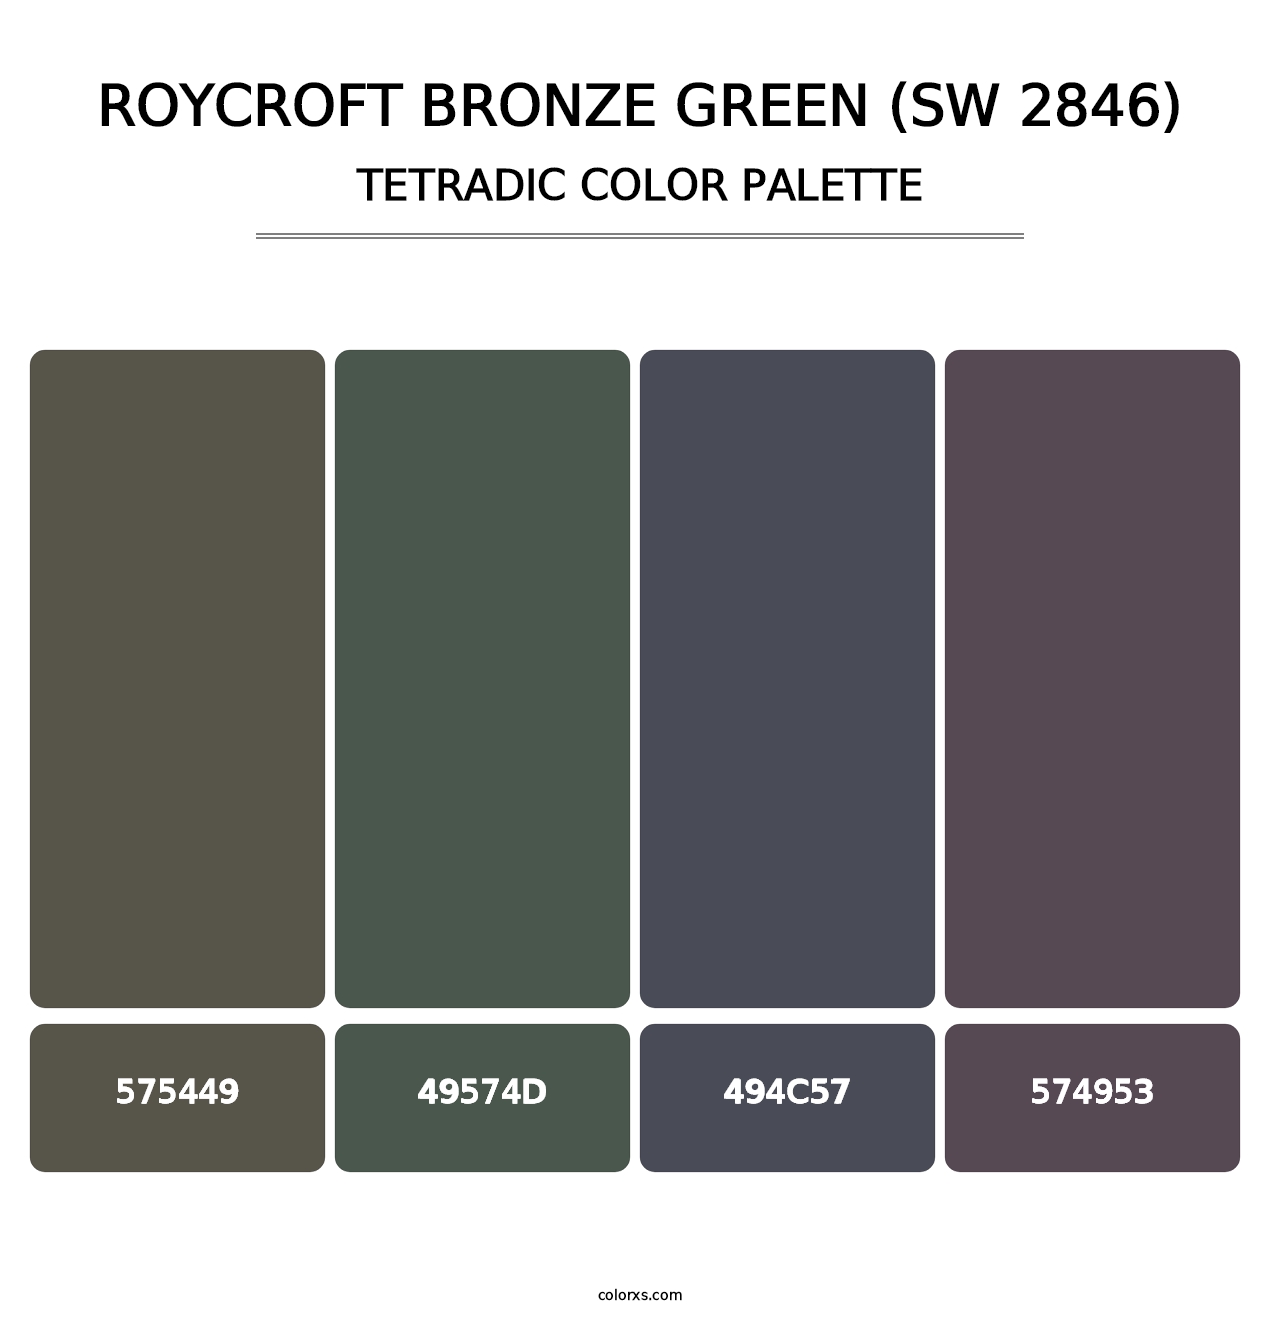 Roycroft Bronze Green (SW 2846) - Tetradic Color Palette